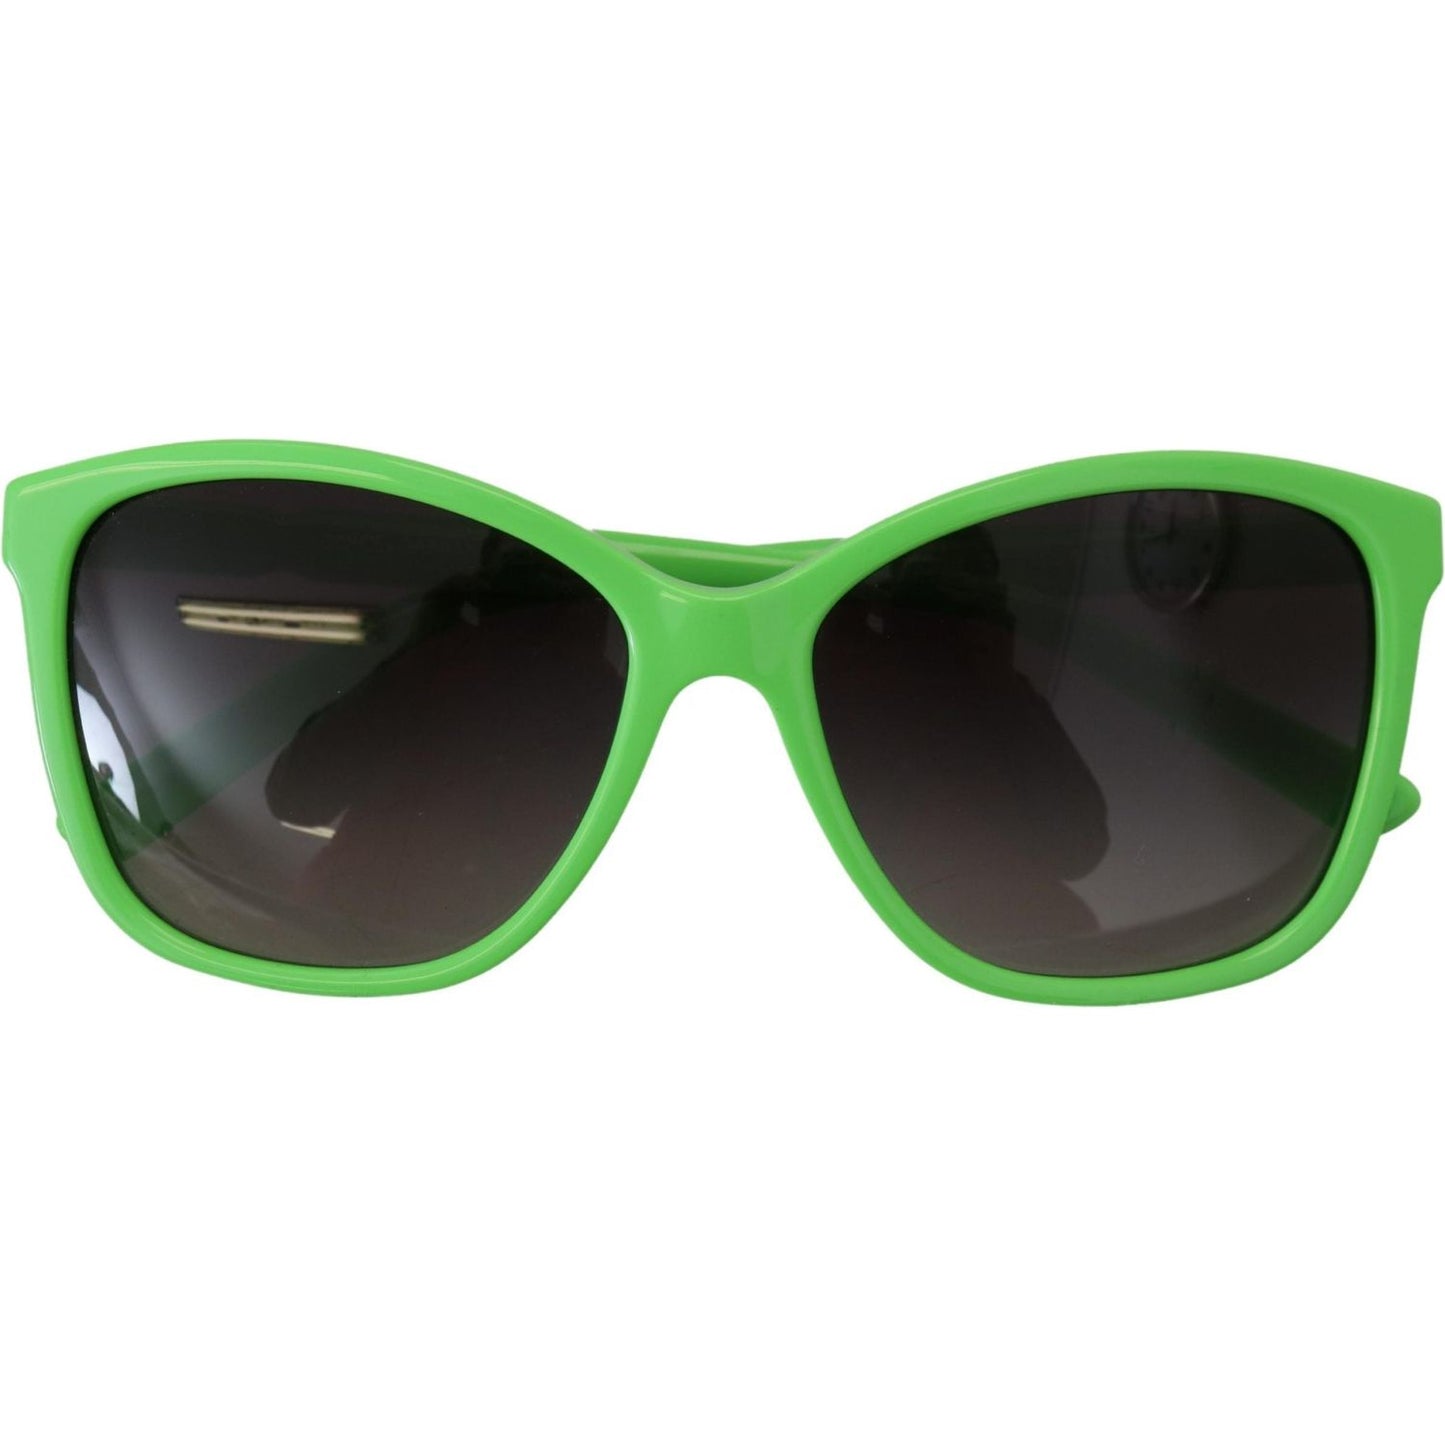 Dolce & Gabbana Chic Green Acetate Round Sunglasses green-acetate-frame-round-shades-dg4170pm-sunglasses IMG_3469-scaled-217b20b5-de4.jpg